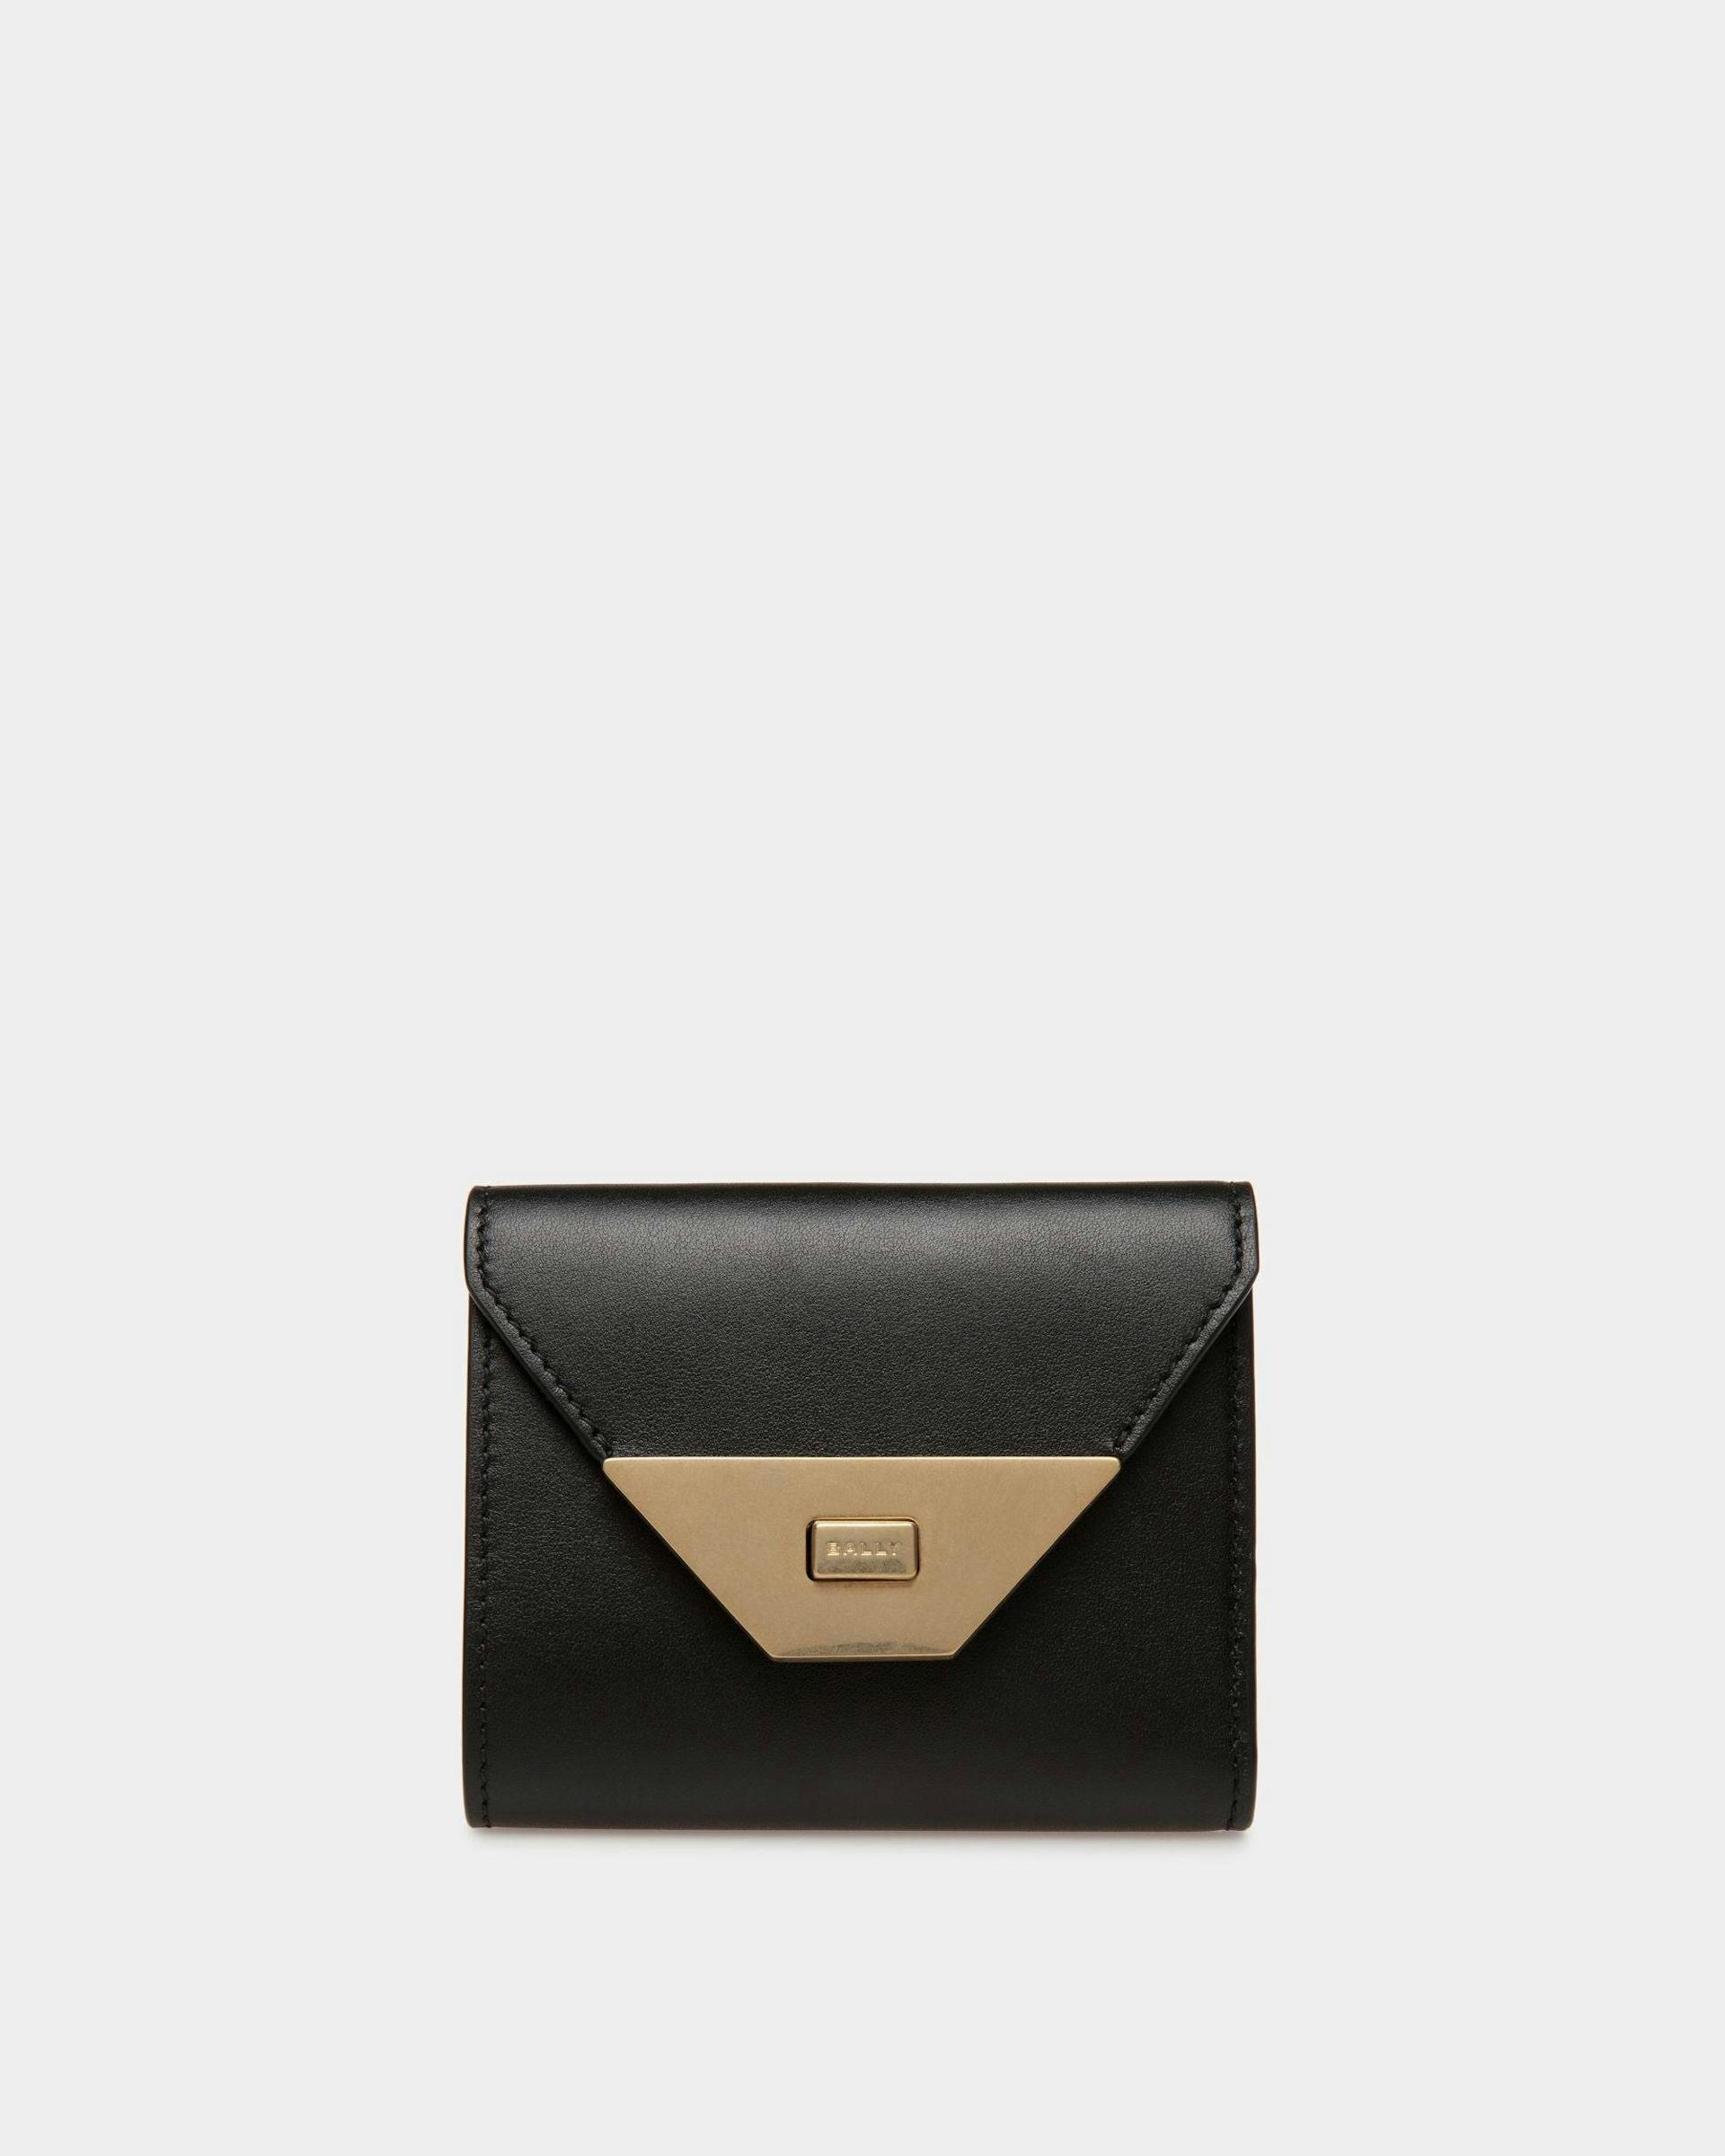 Women's Tilt Wallet In Black Leather | Bally | Still Life Front